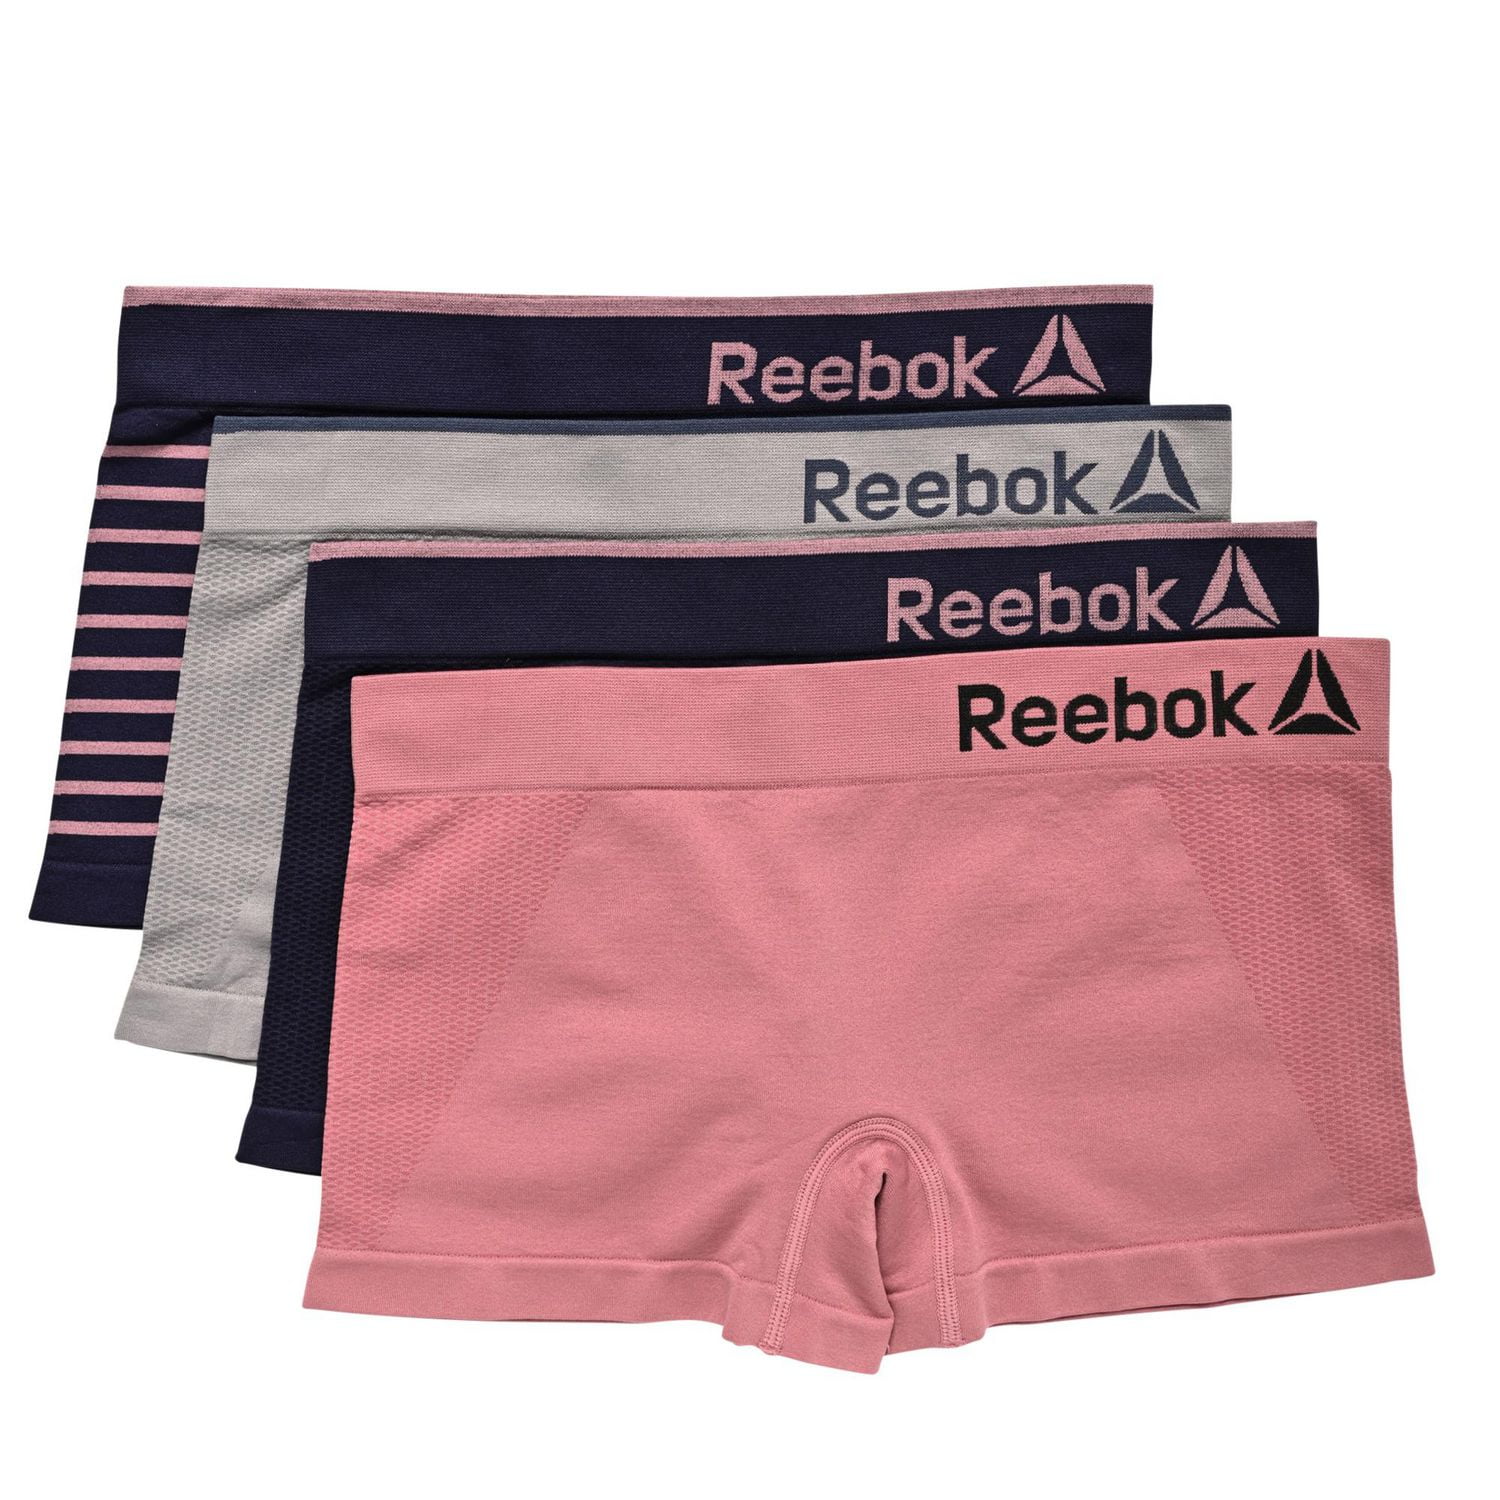 Reebok Women's Underwear - Performance Seamless Boyshorts (4 Pack), Size  Small, Charcoal Melange/Rhubarb at  Women's Clothing store